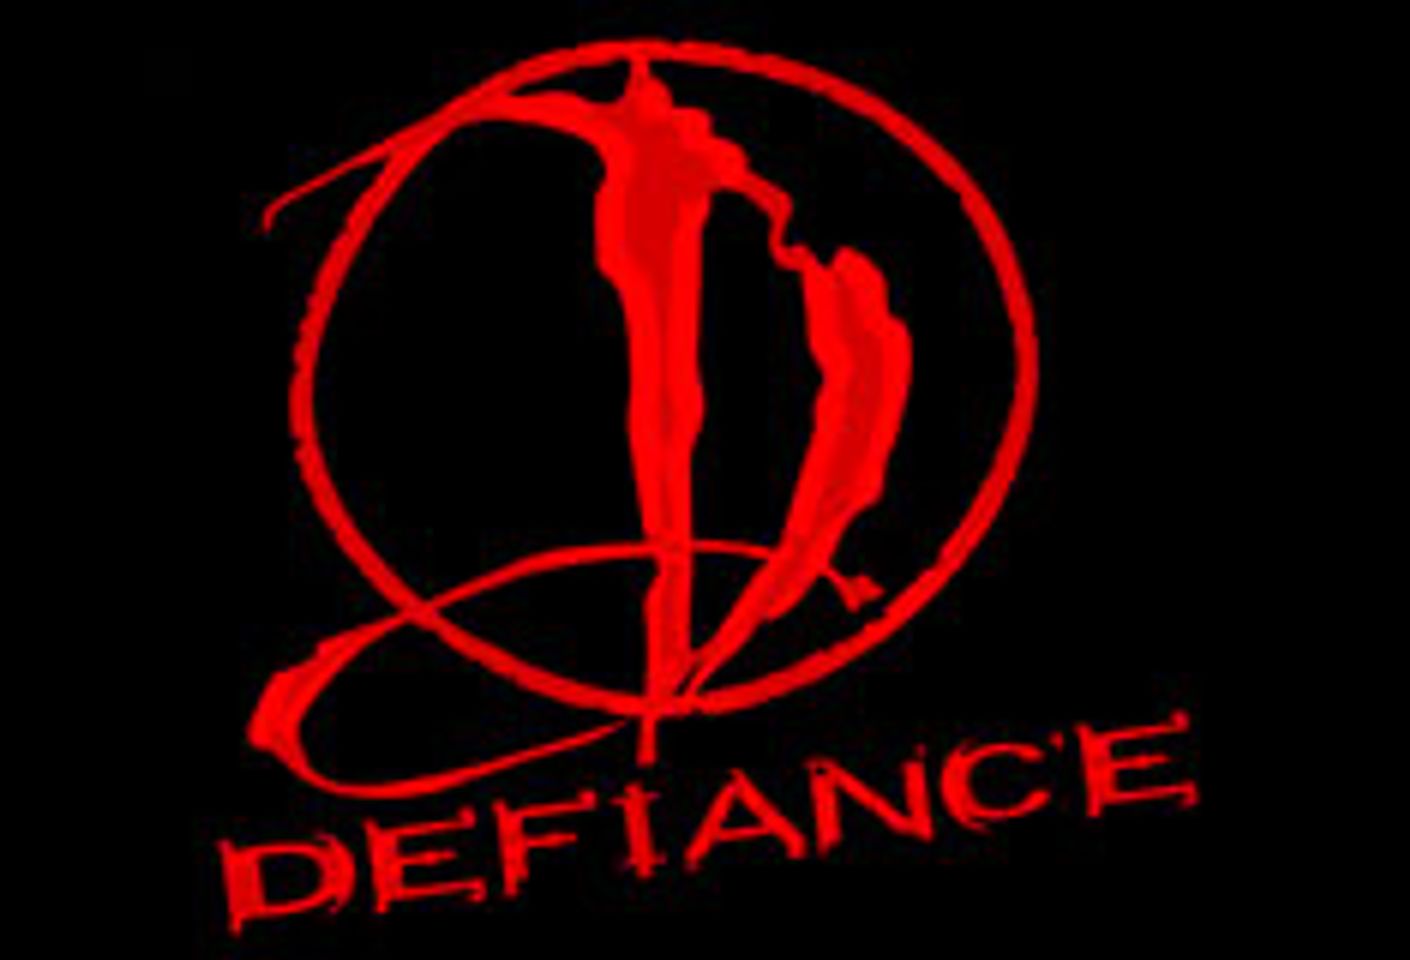 Make Way For Defiance